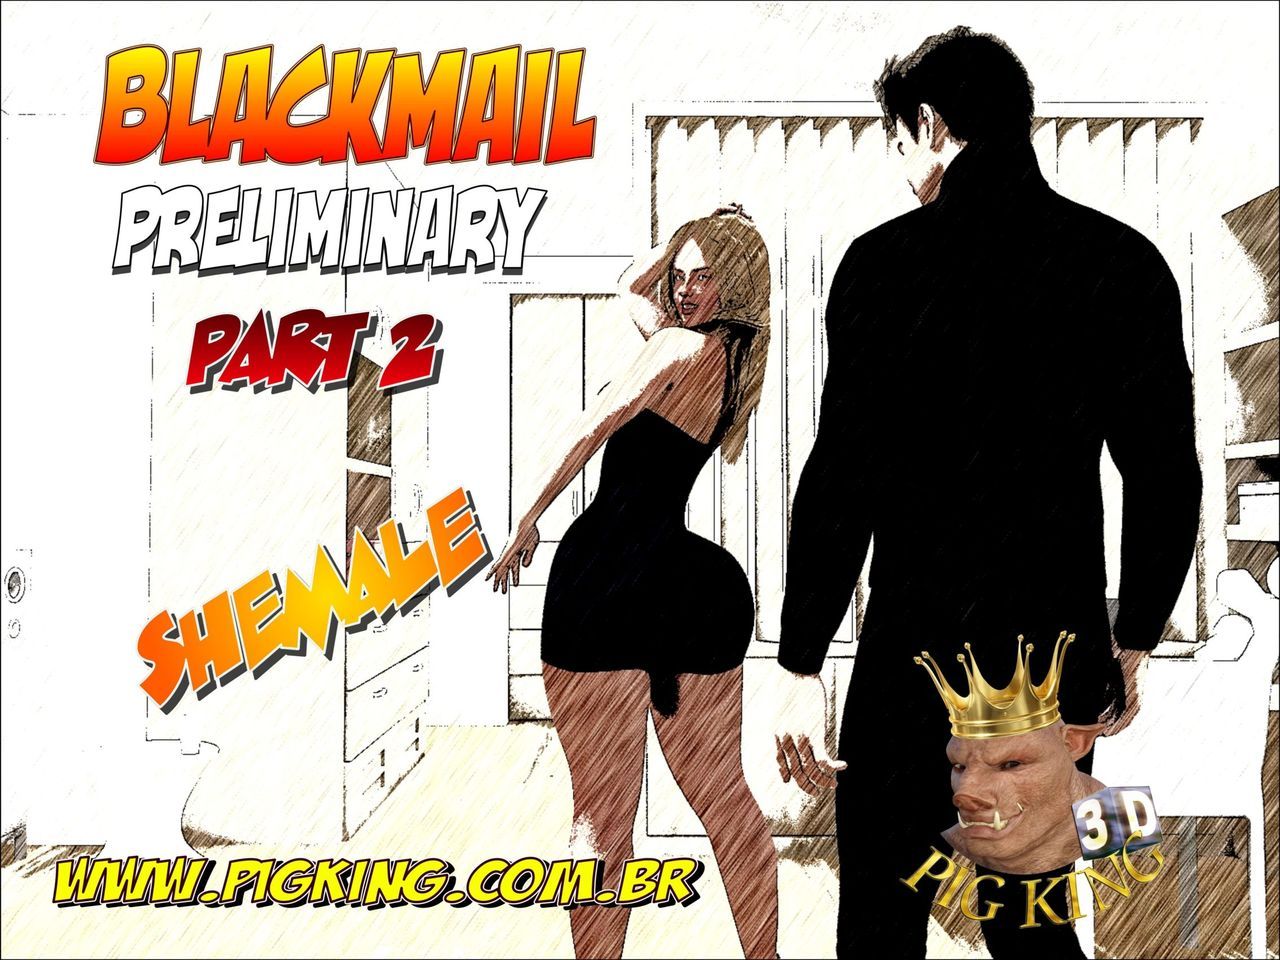 (PigKing) Blackbail Preliminary – Part 2 1